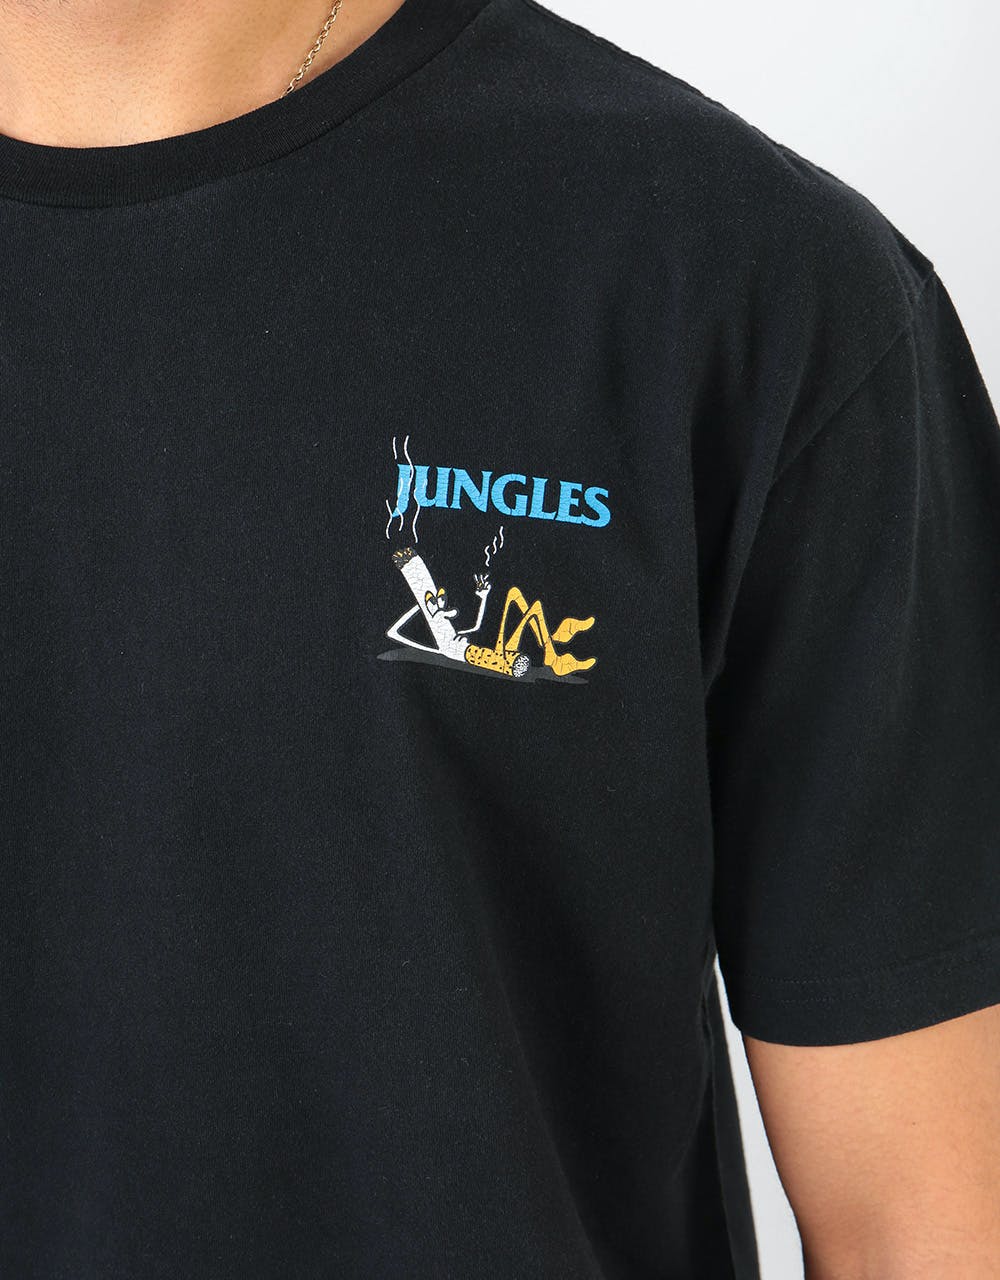 Jungles Jungles Sick and Tired T-Shirt - Black